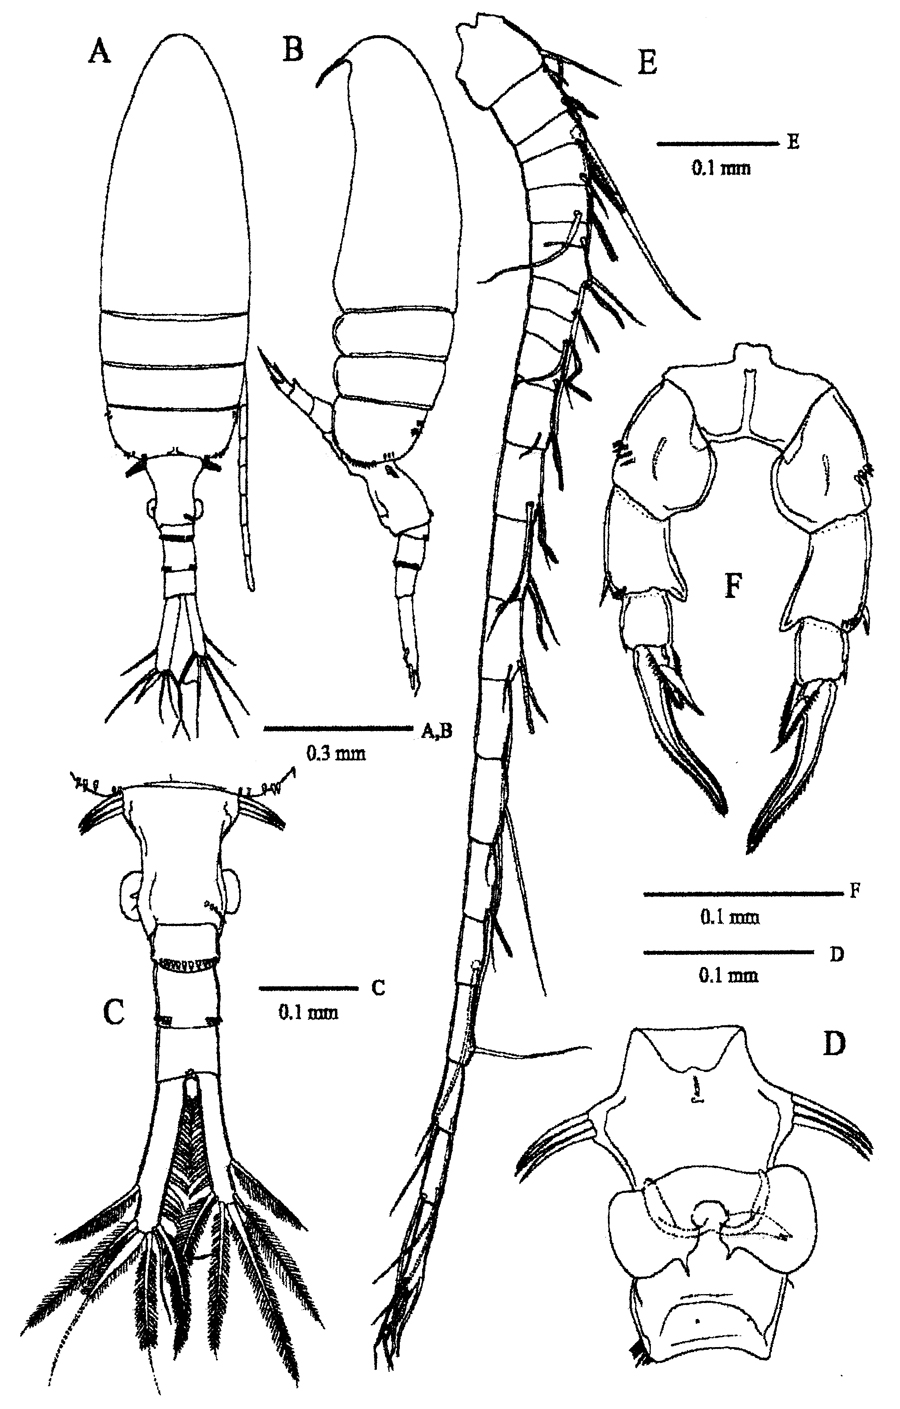 Species Pseudodiaptomus terazakii - Plate 1 of morphological figures